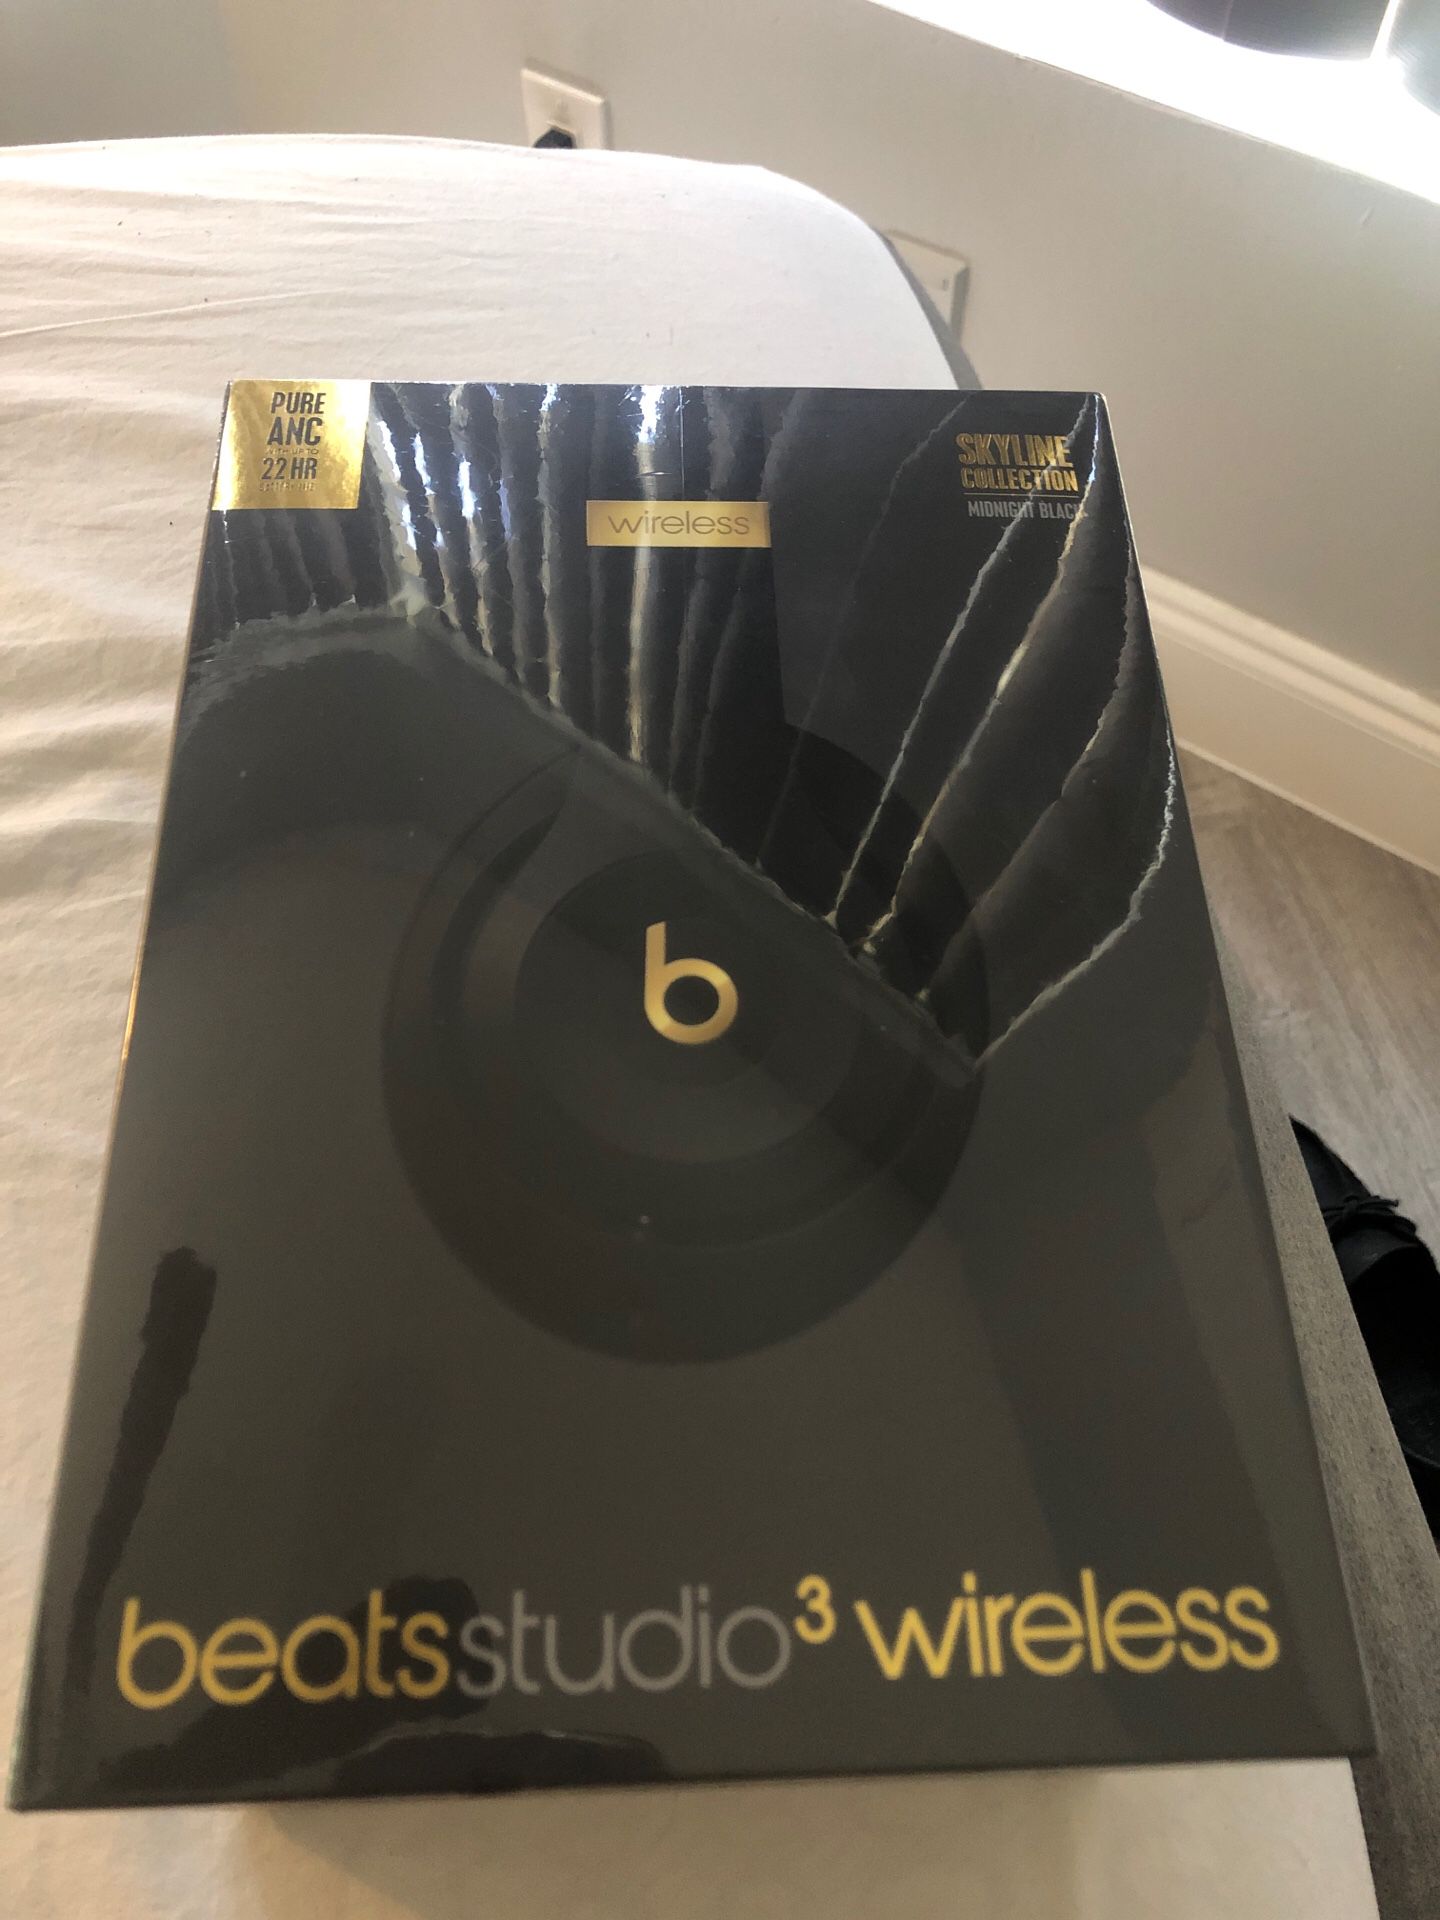 Beats studio 3 wireless (midnight black)